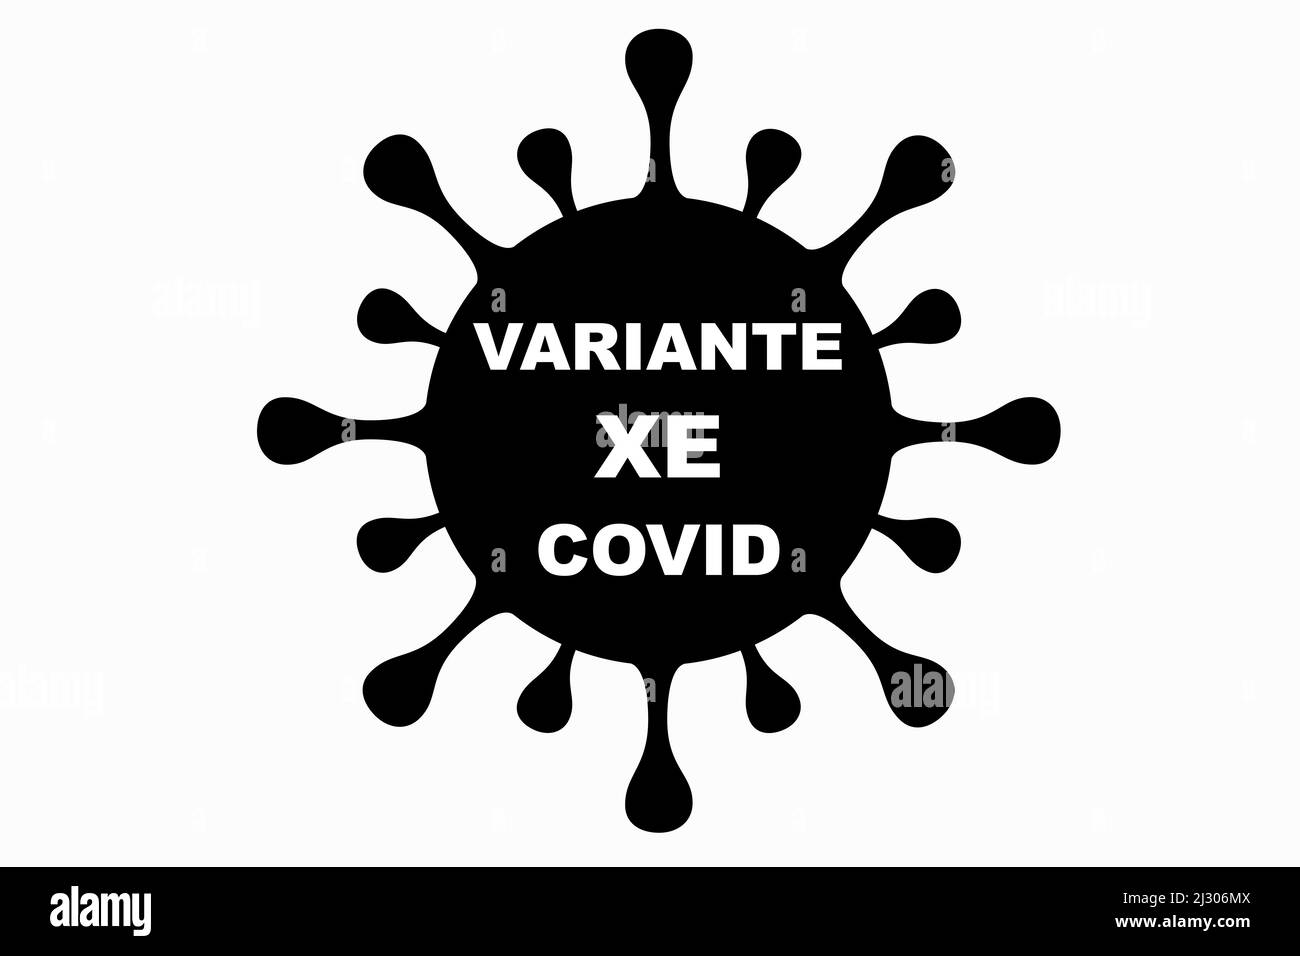 XE. New variant of the SARS-CoV-2 coronavirus. Subvariant of Omicron. Design horizontal. Virus design and black text. Illustration. Stock Photo